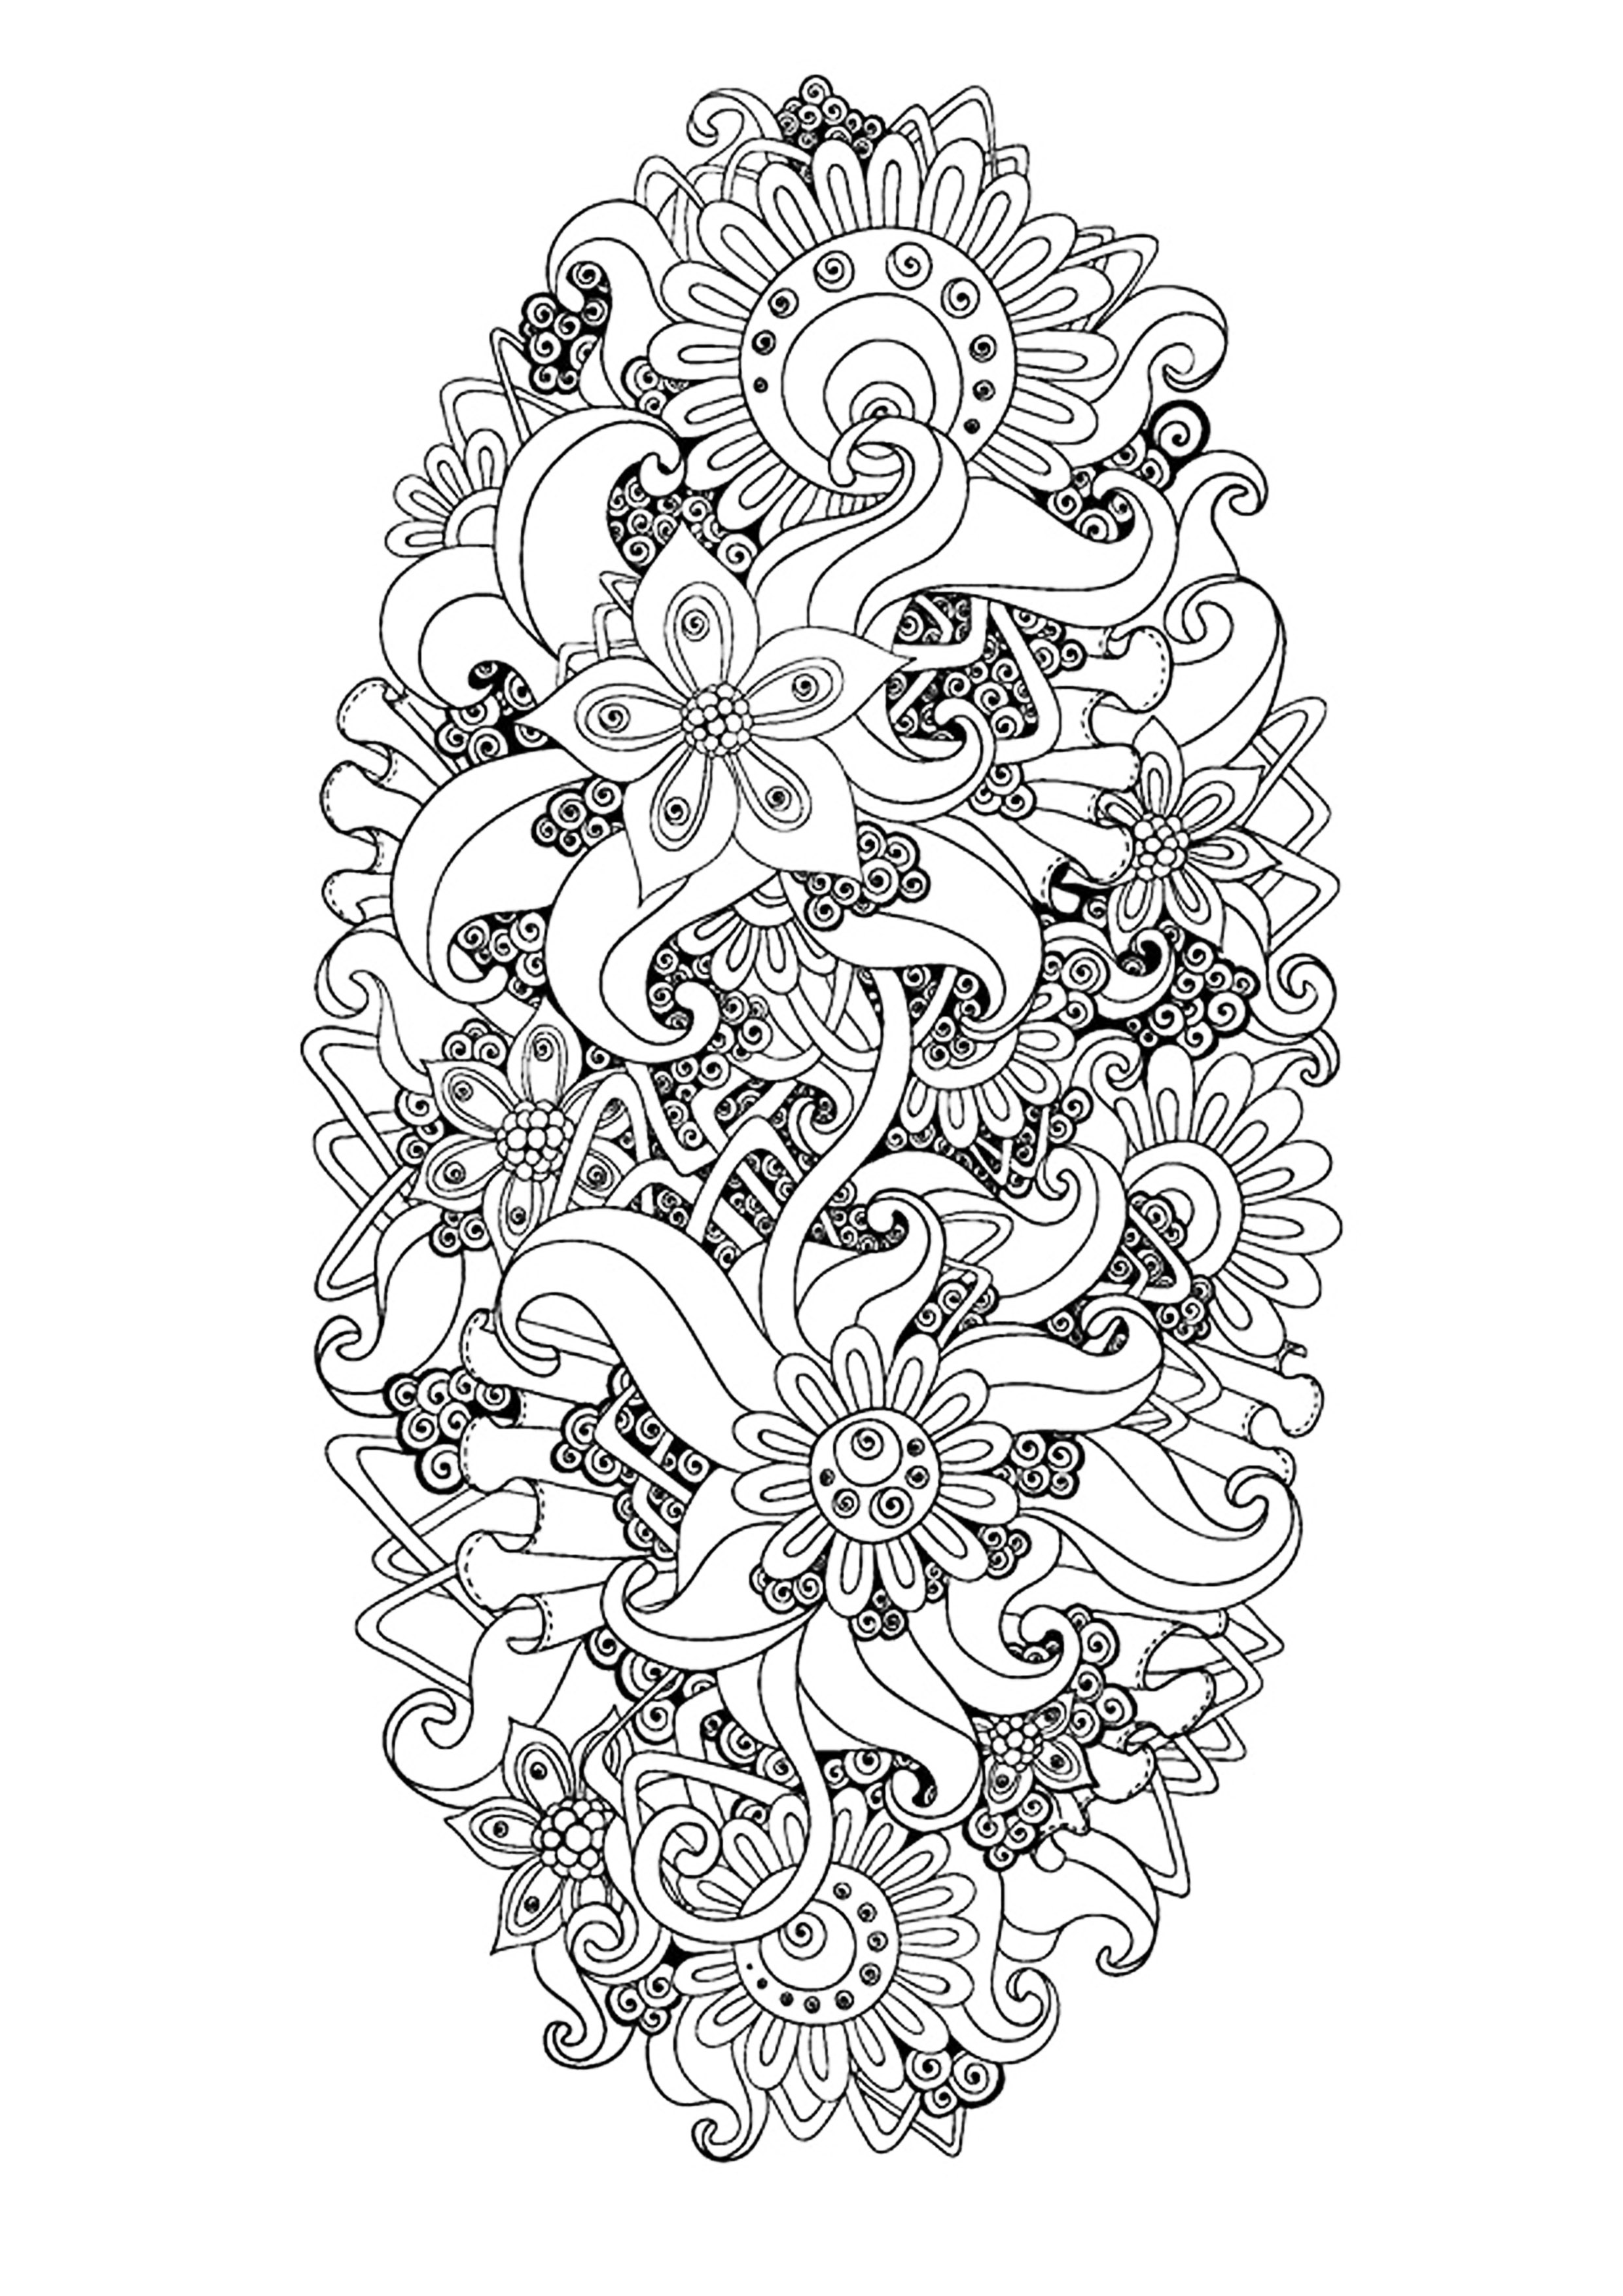 Zen antistress abstract pattern inspired by flowers by juliasnegireva